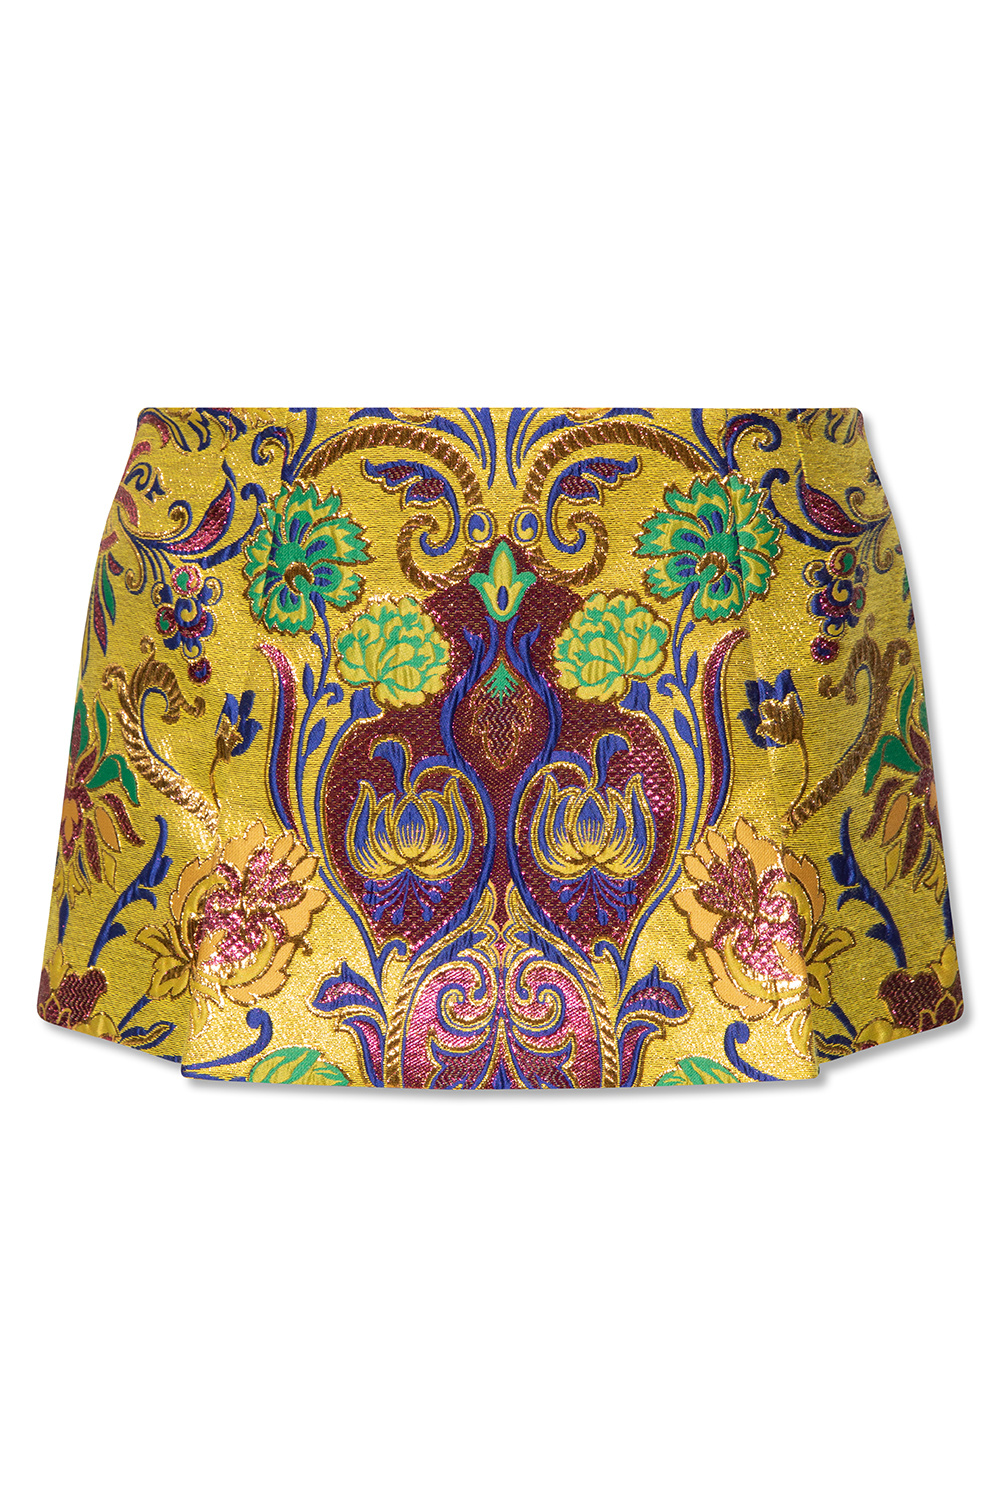 Dolce & Gabbana Kids cotton Bermuda shorts Jacquard skirt